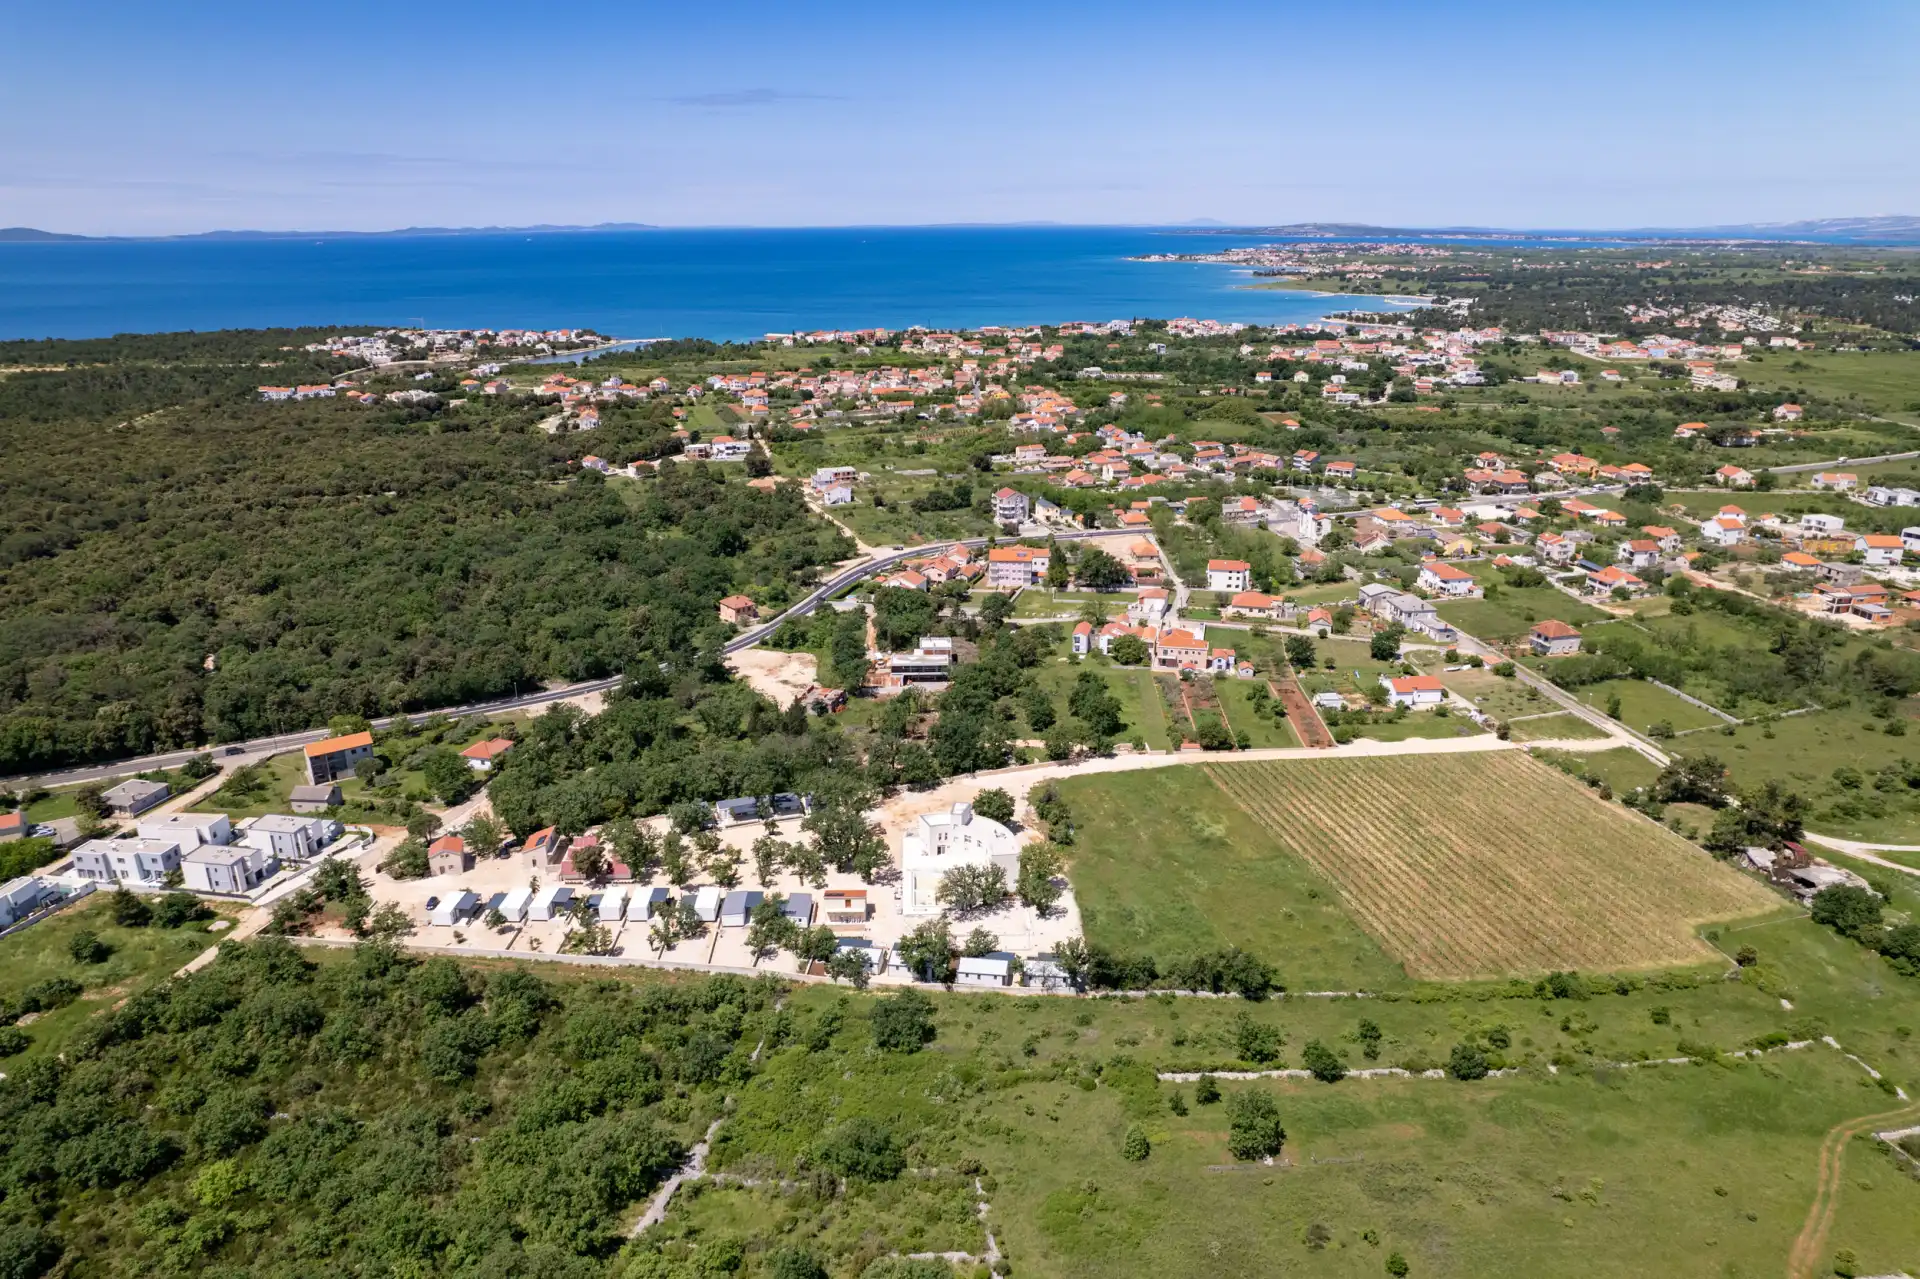 Zaton by Zadar aerial image